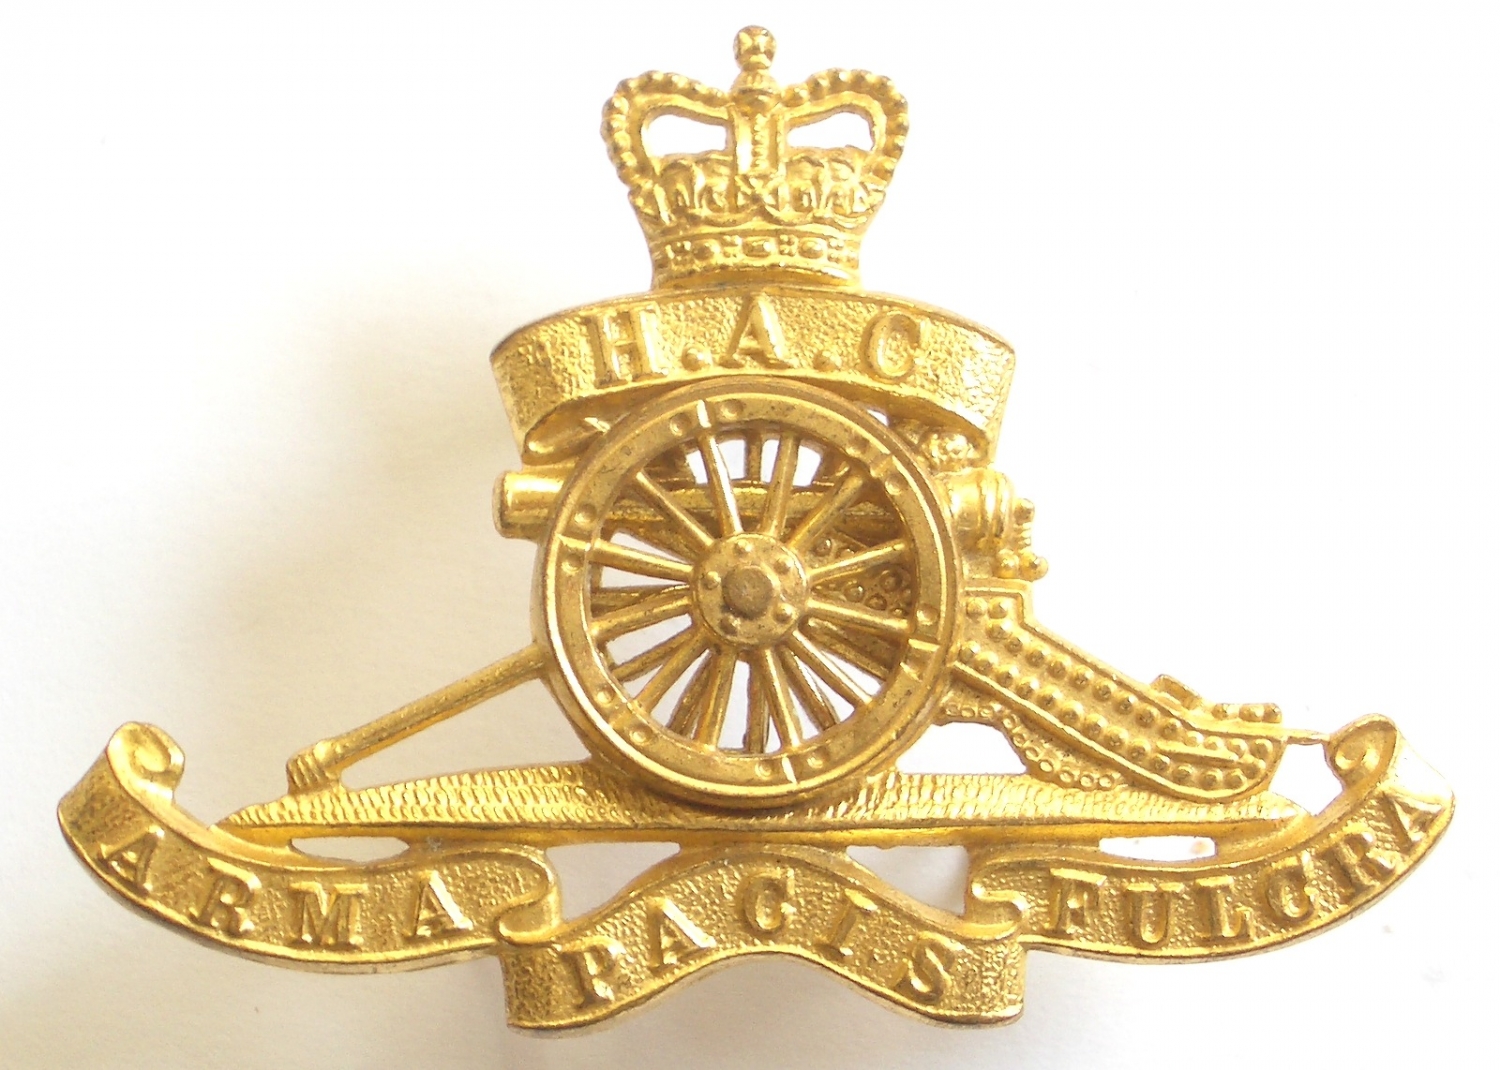 HAC EIIR Officer's gilt gun pattern cap badge